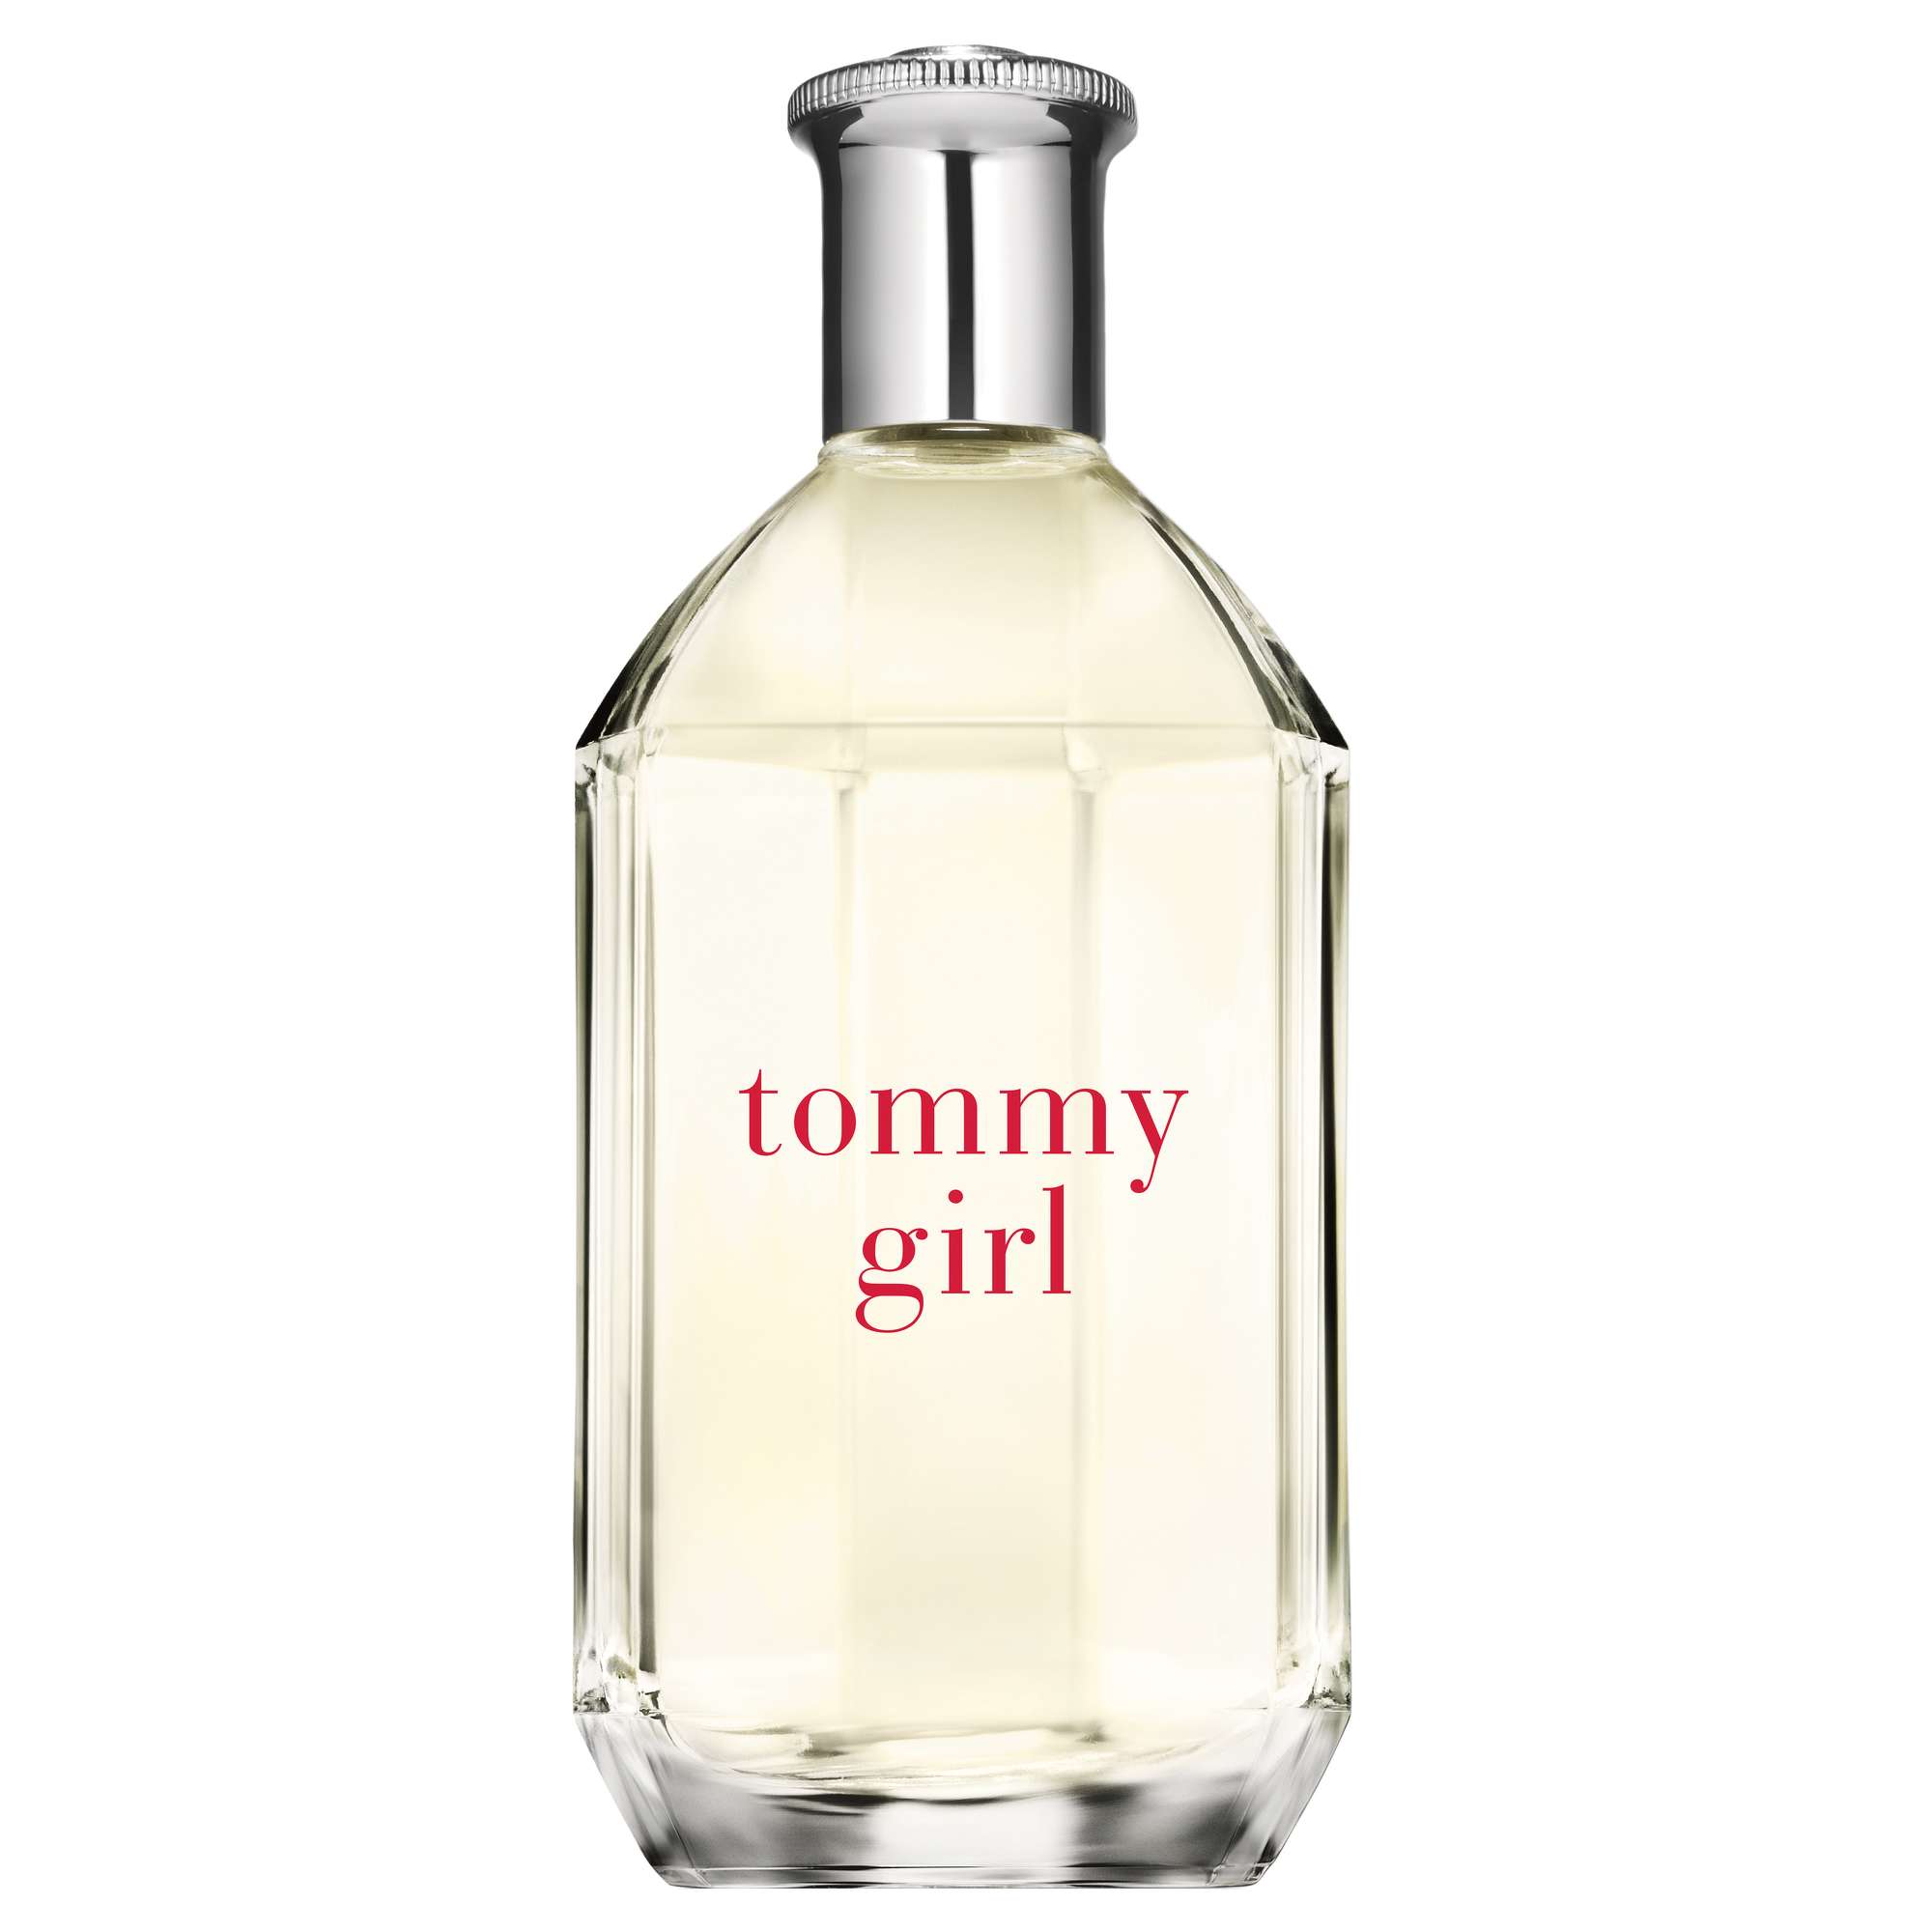 Photos - Women's Fragrance Tommy Hilfiger Tommy Girl Eau de Toilette Spray 100ml 